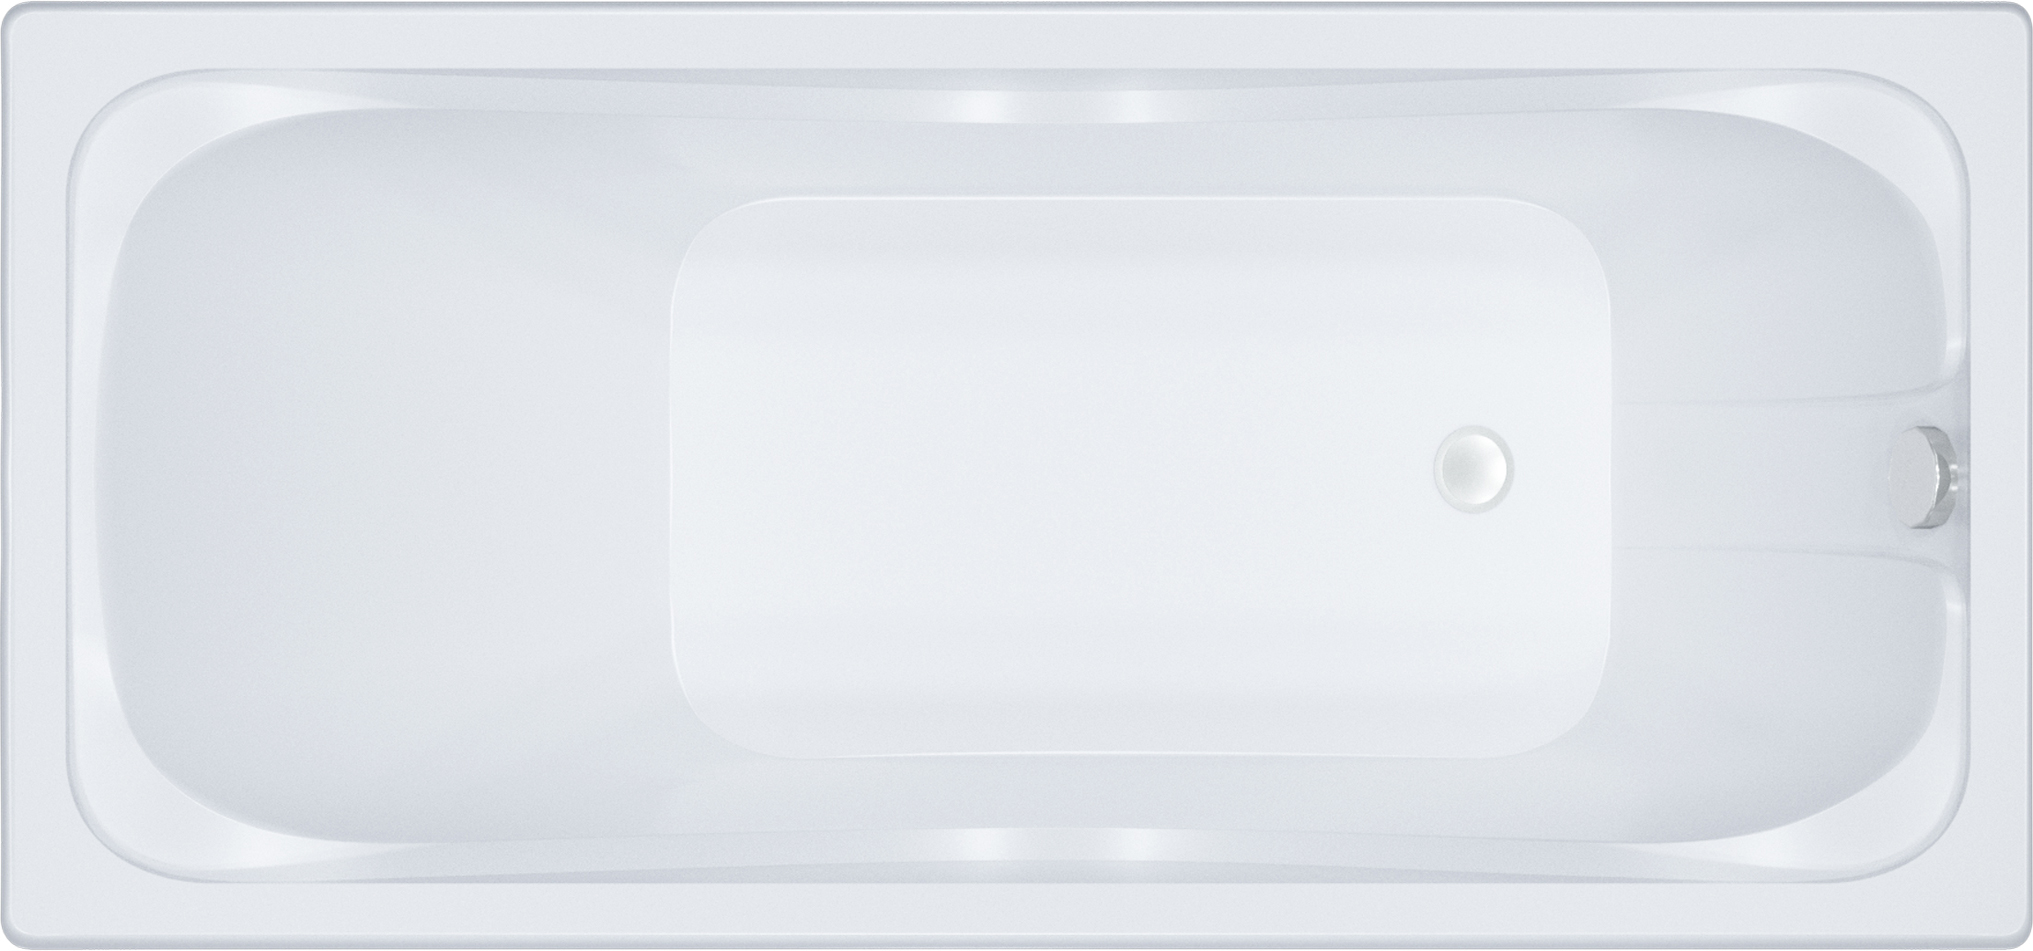 Ванна акриловая Тритон Стандарт 150 б/экрана